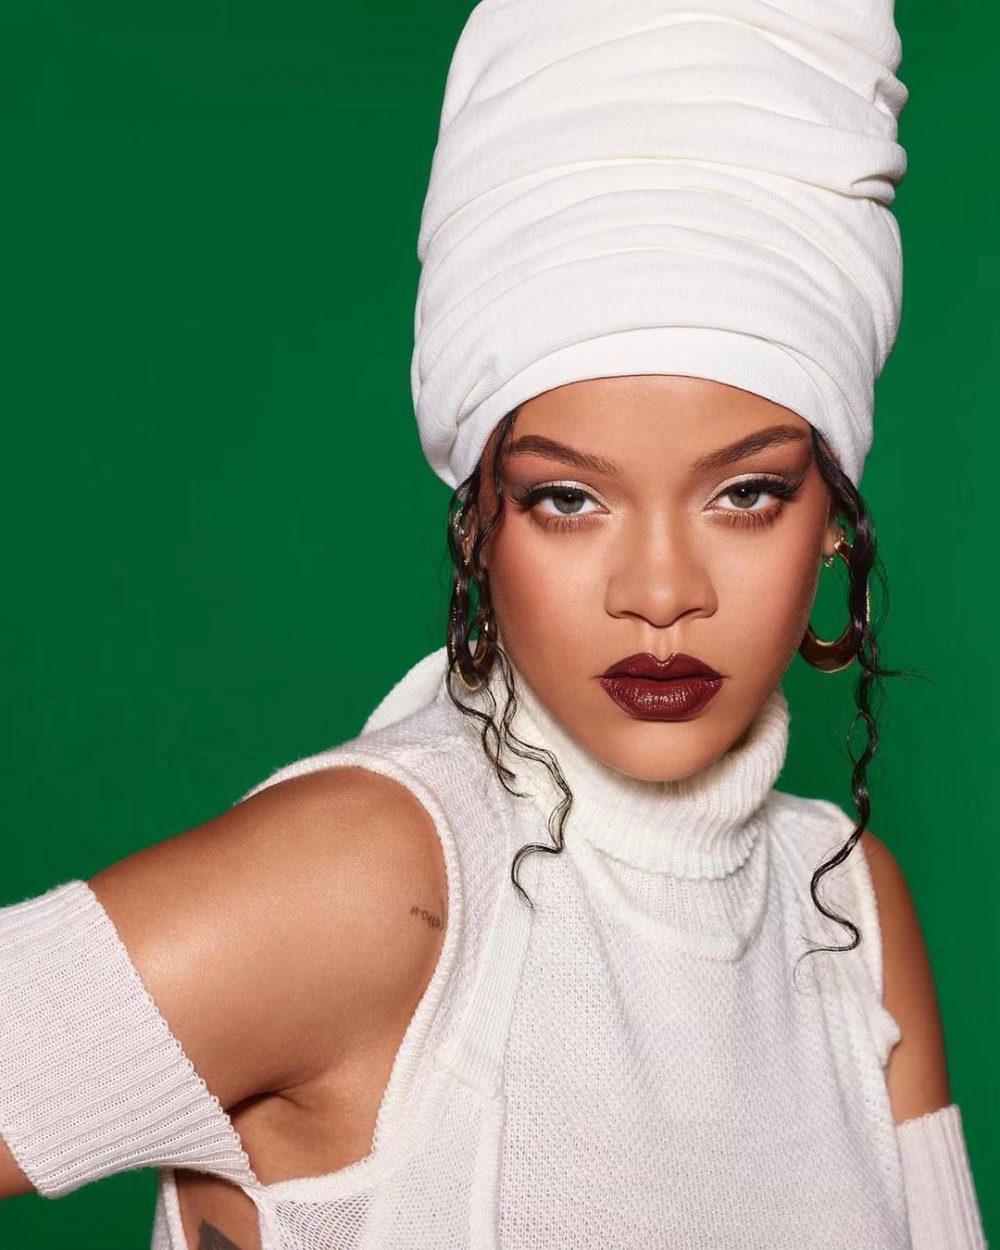 Rihanna親自為自己創立的彩妝品牌Fenty Beauty拍攝畫報。